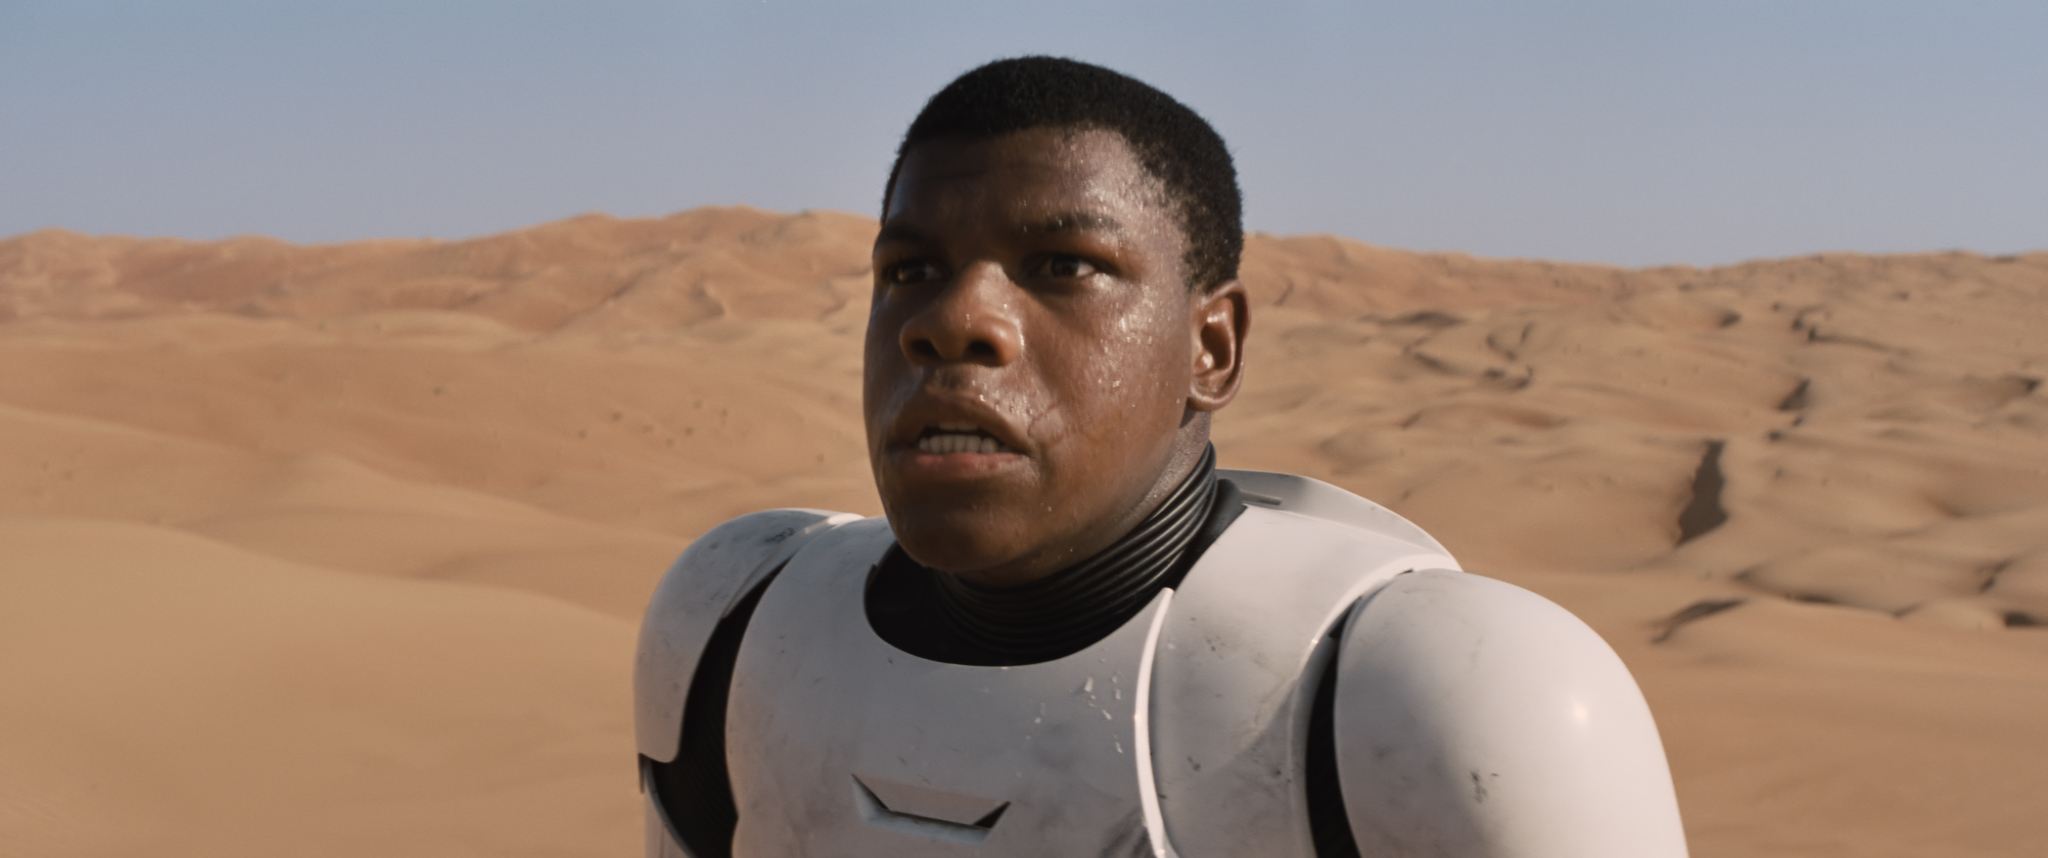 John Boyega Star Wars Episode Vii The Force Awakens Finn Star Wars 2048x858